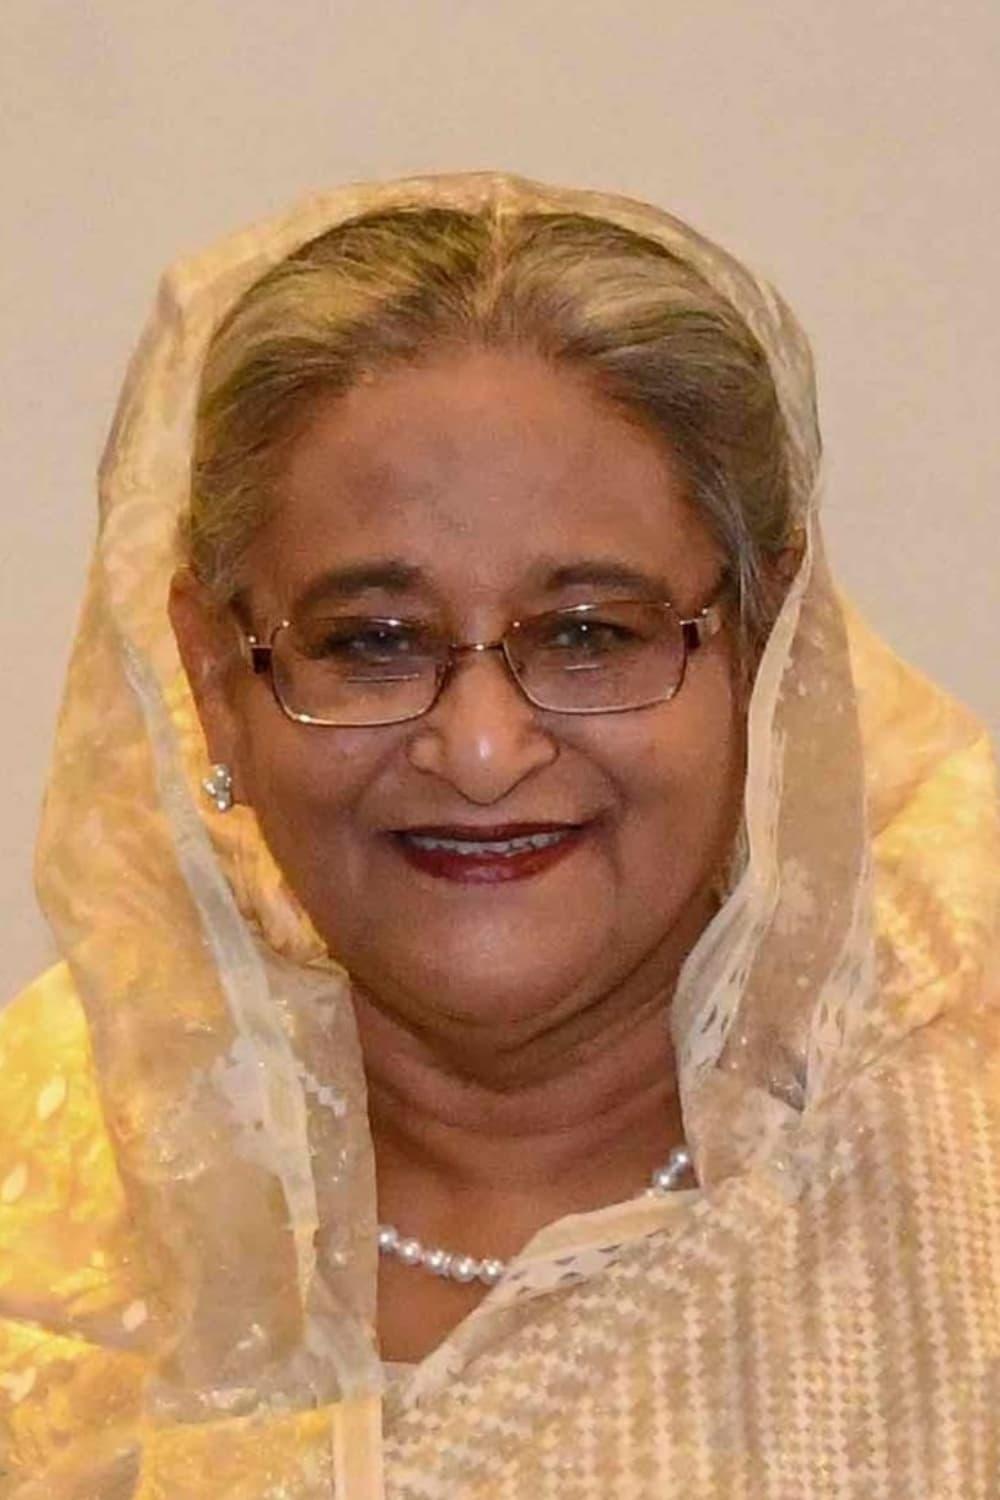 Sheikh Hasina poster